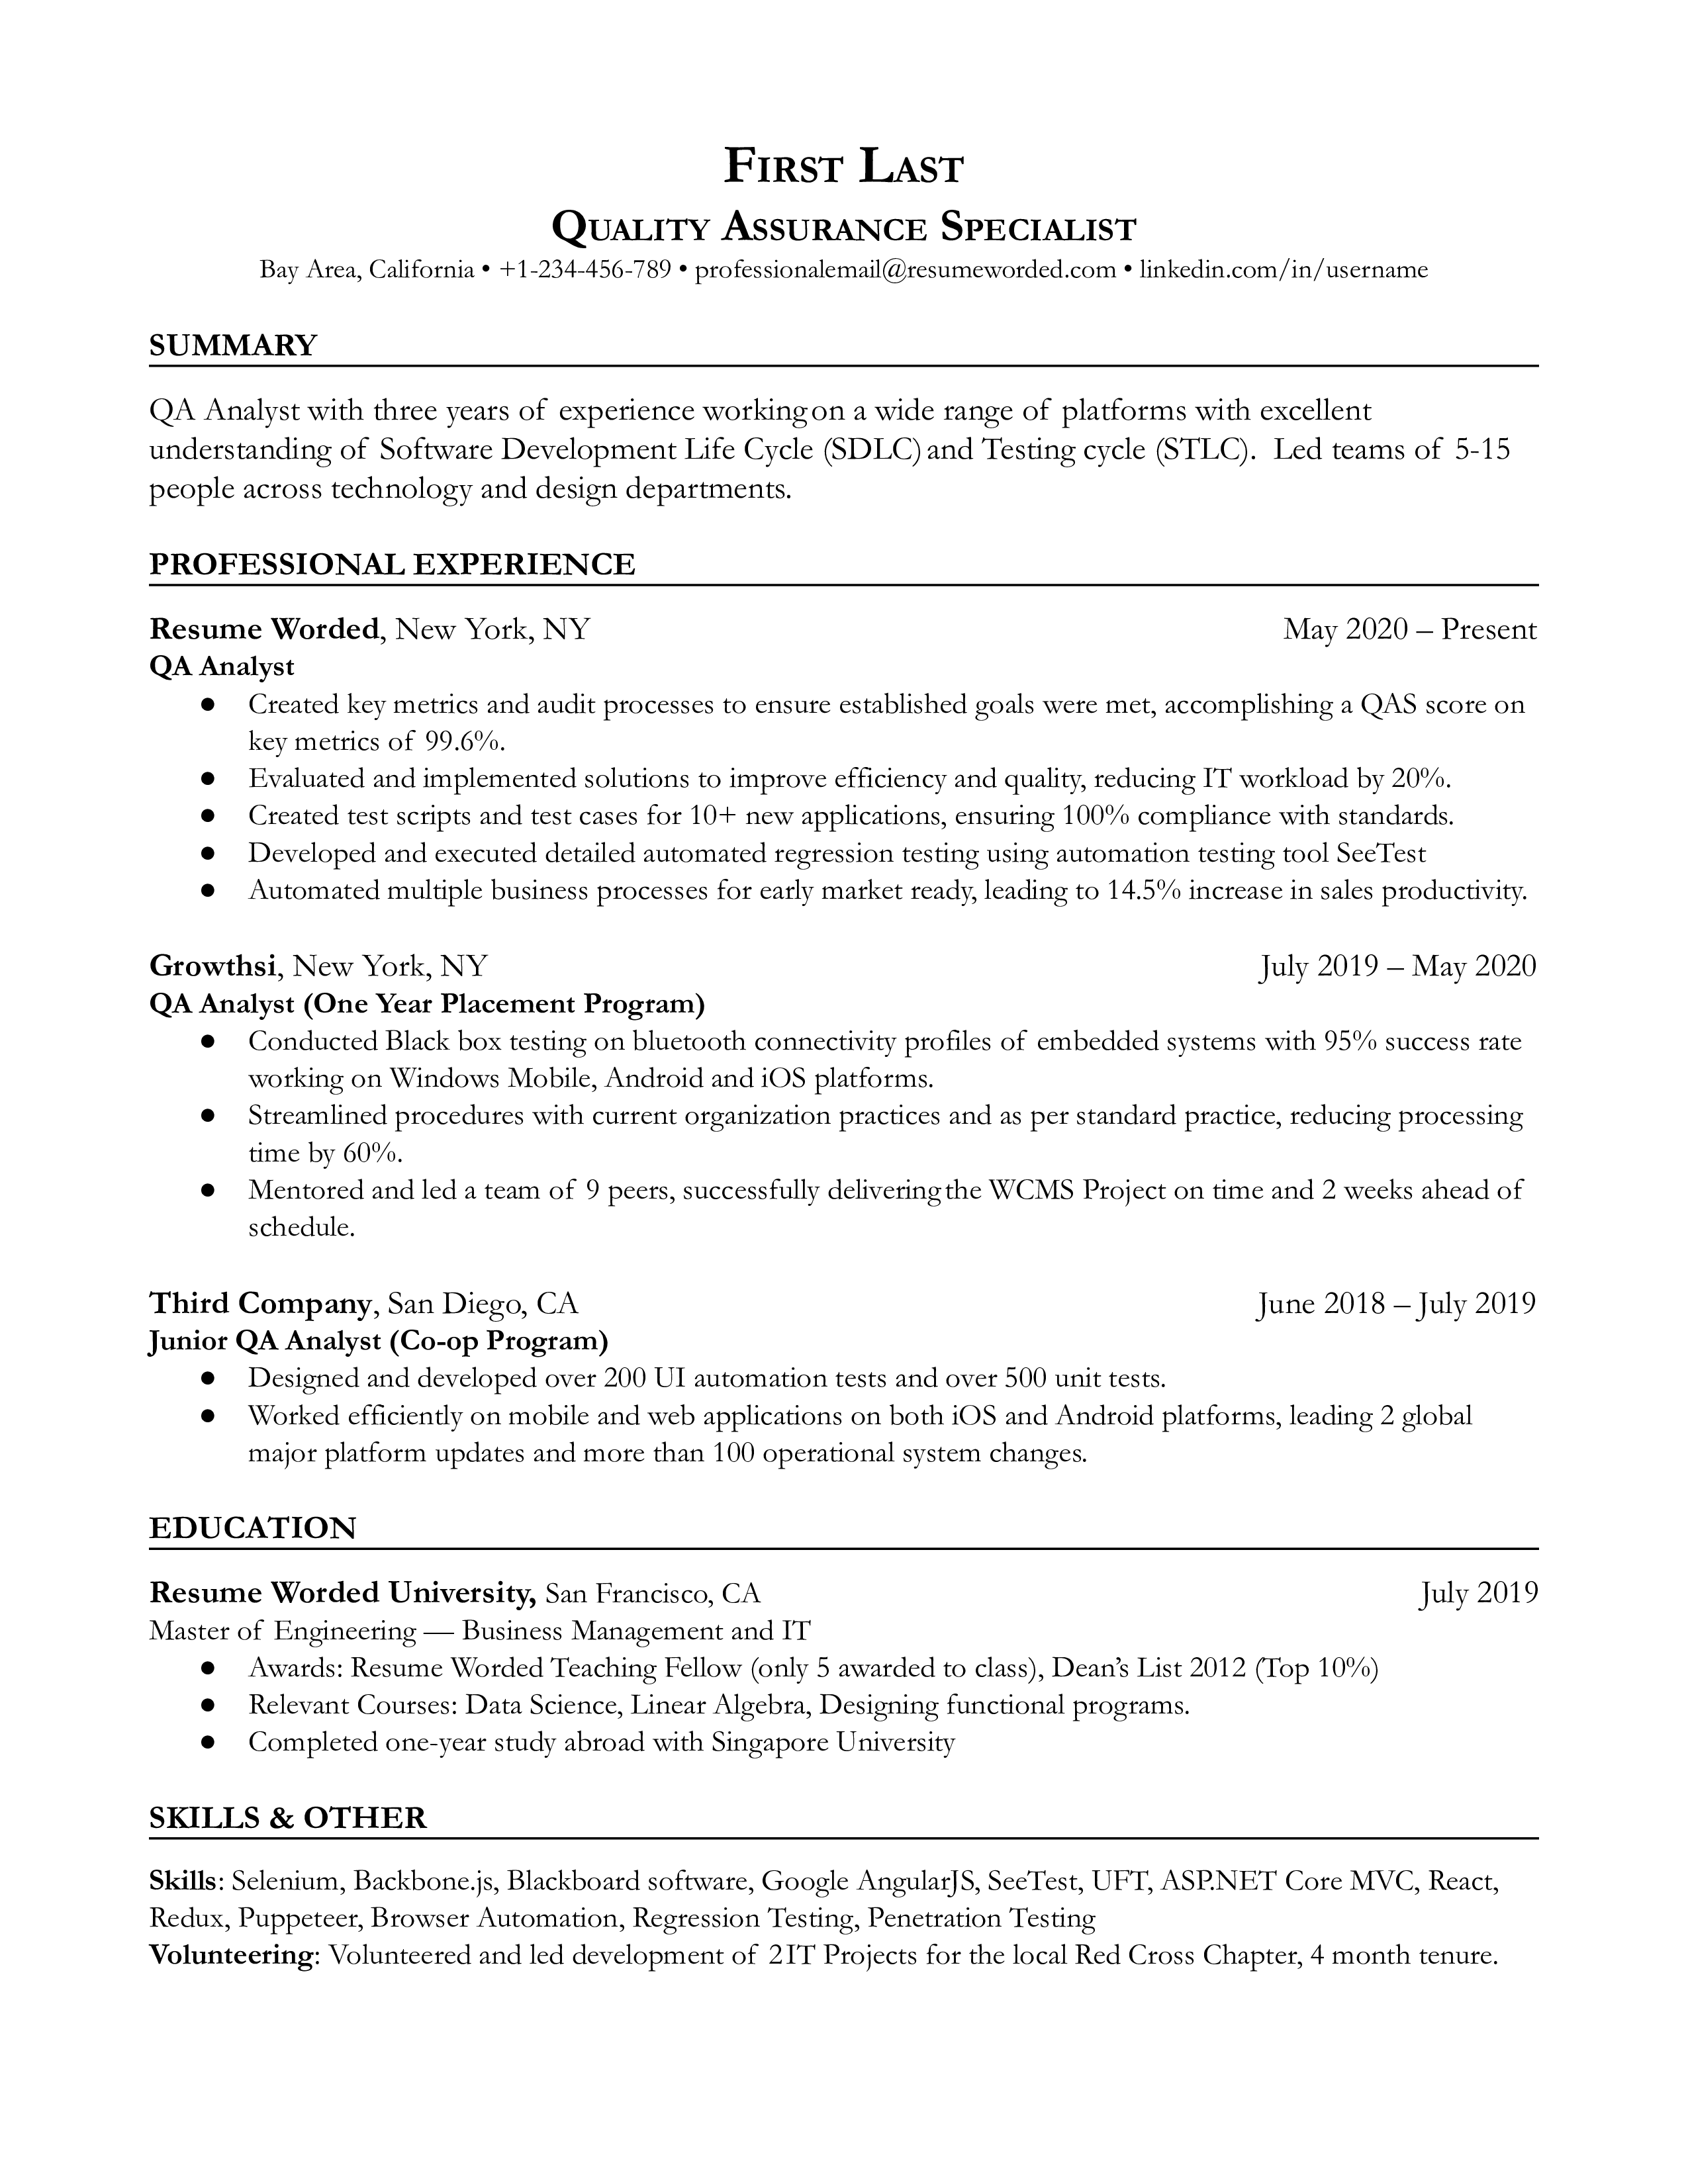 QA (Quality Assurance) Analyst/Specialist Resume Sample